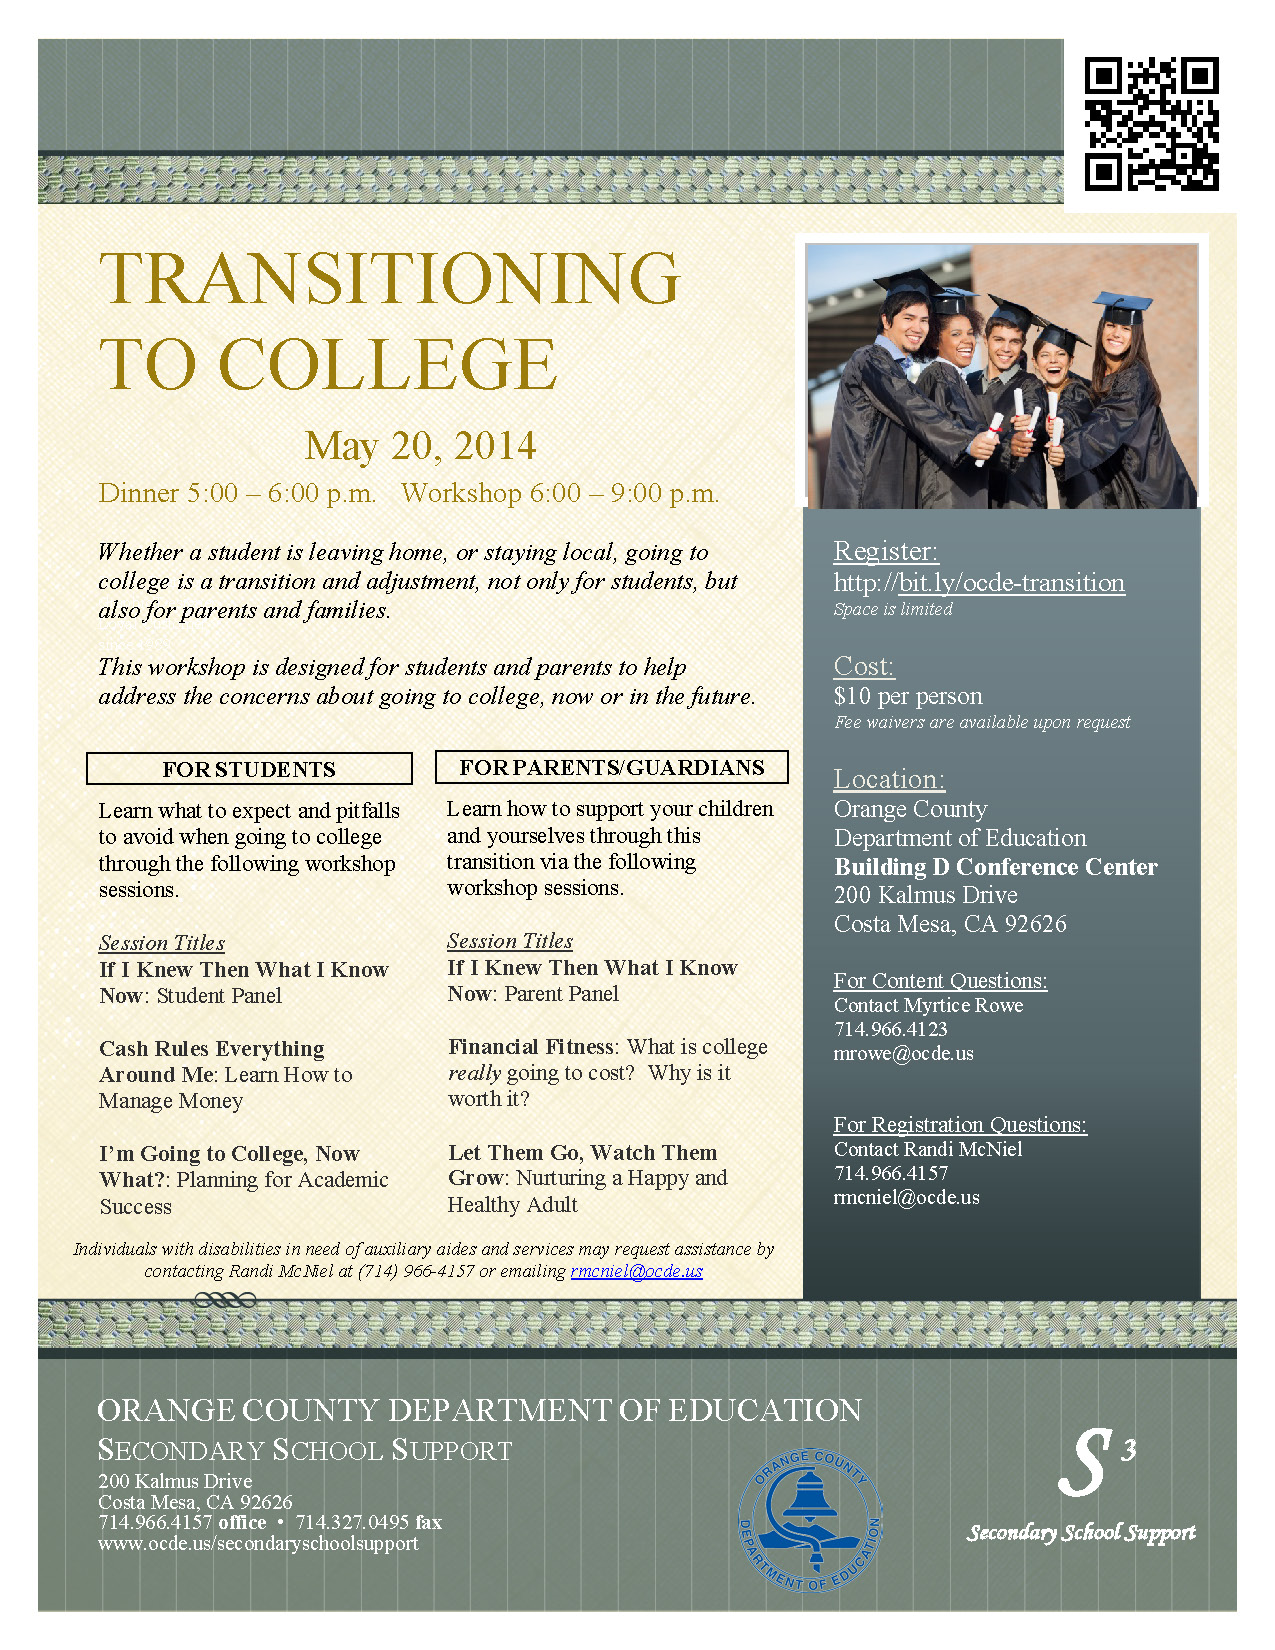 Transition to College workshop flyer